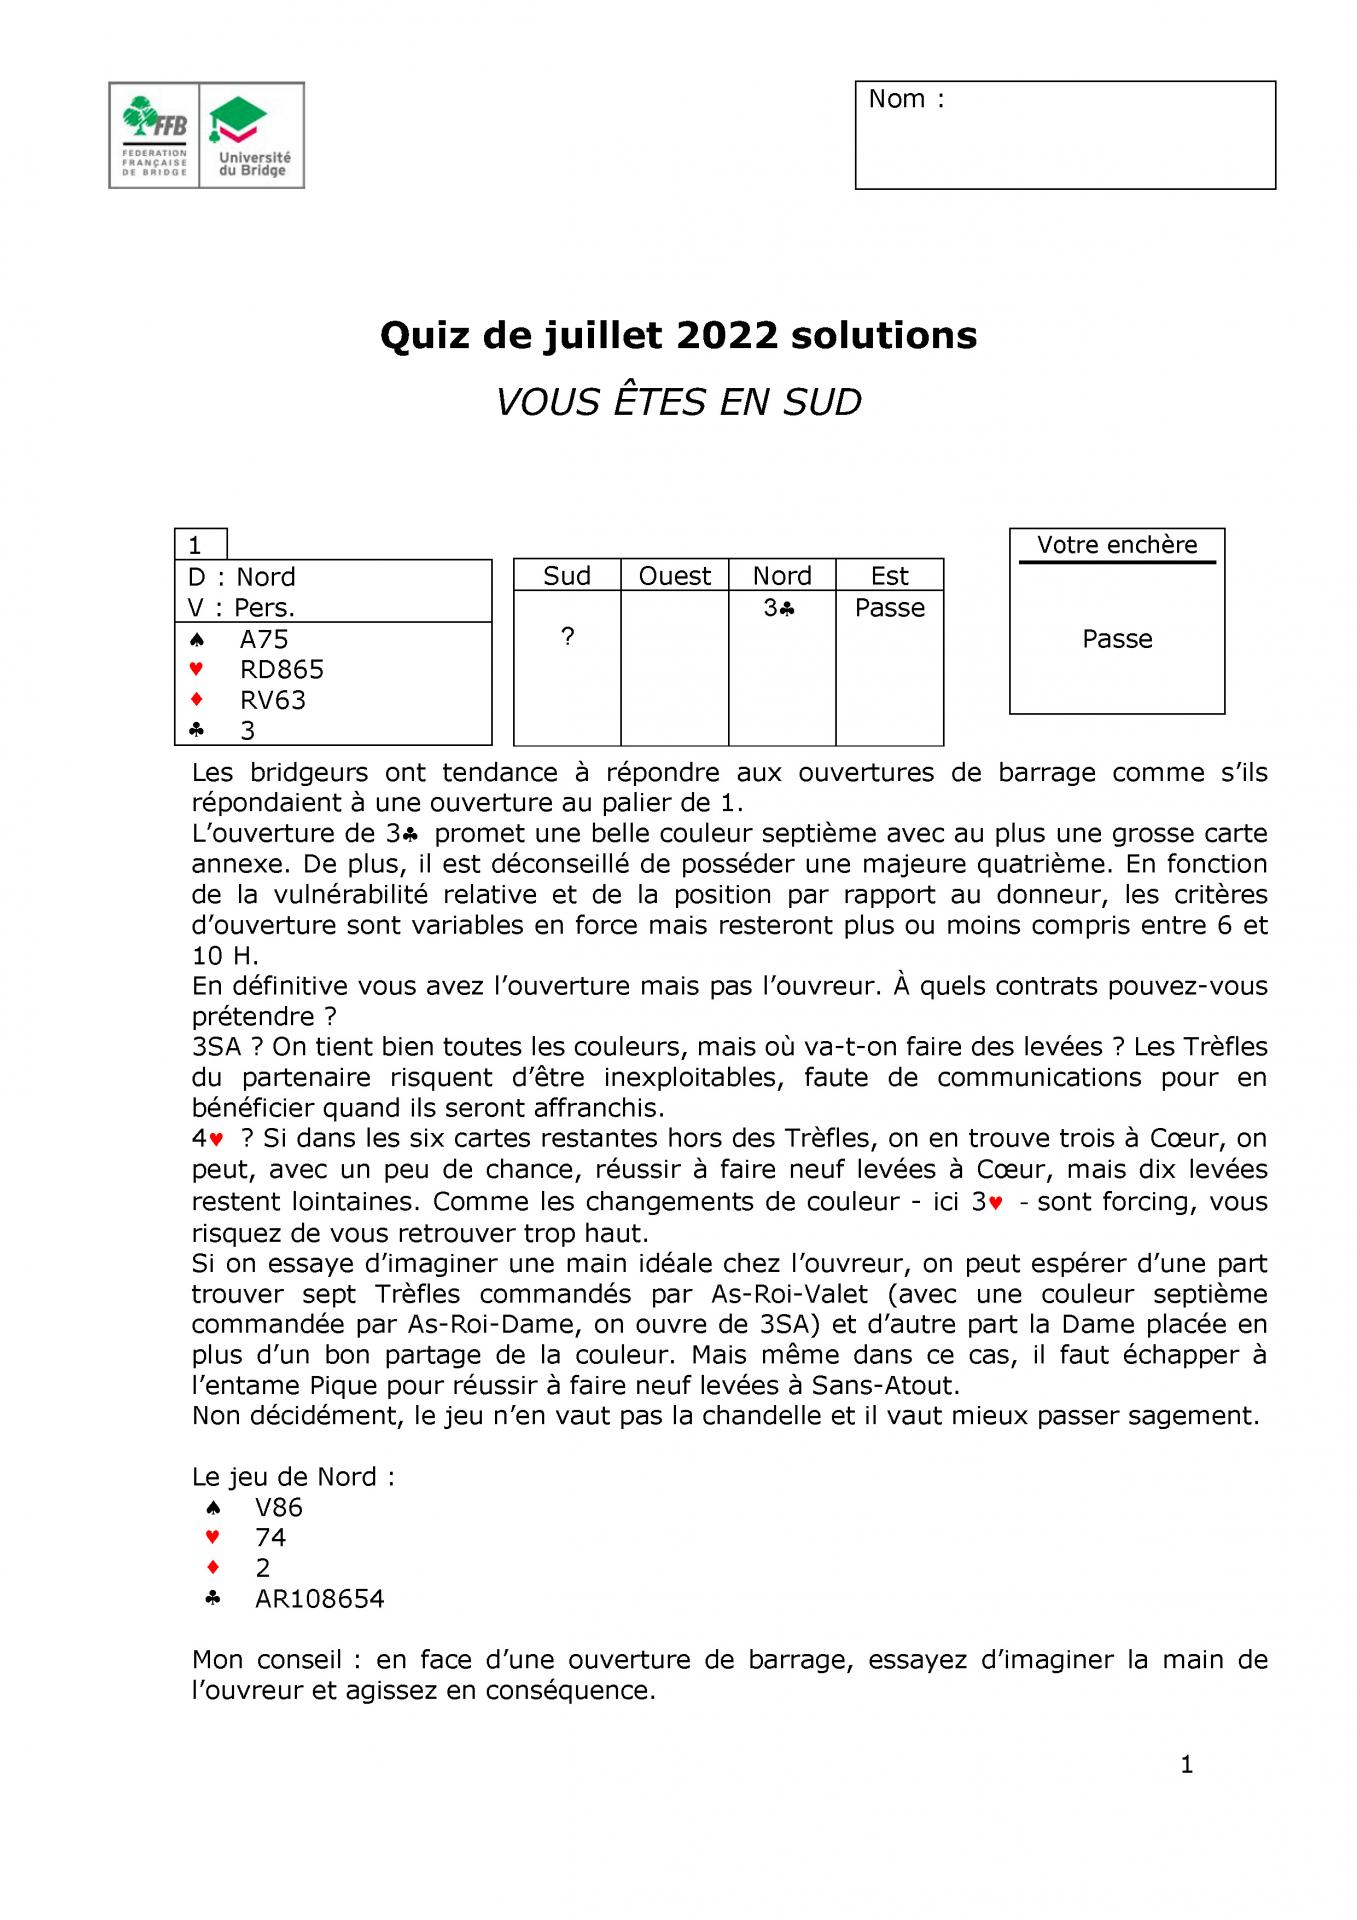 Solutions quiz moniteurs avril 2022 page 1